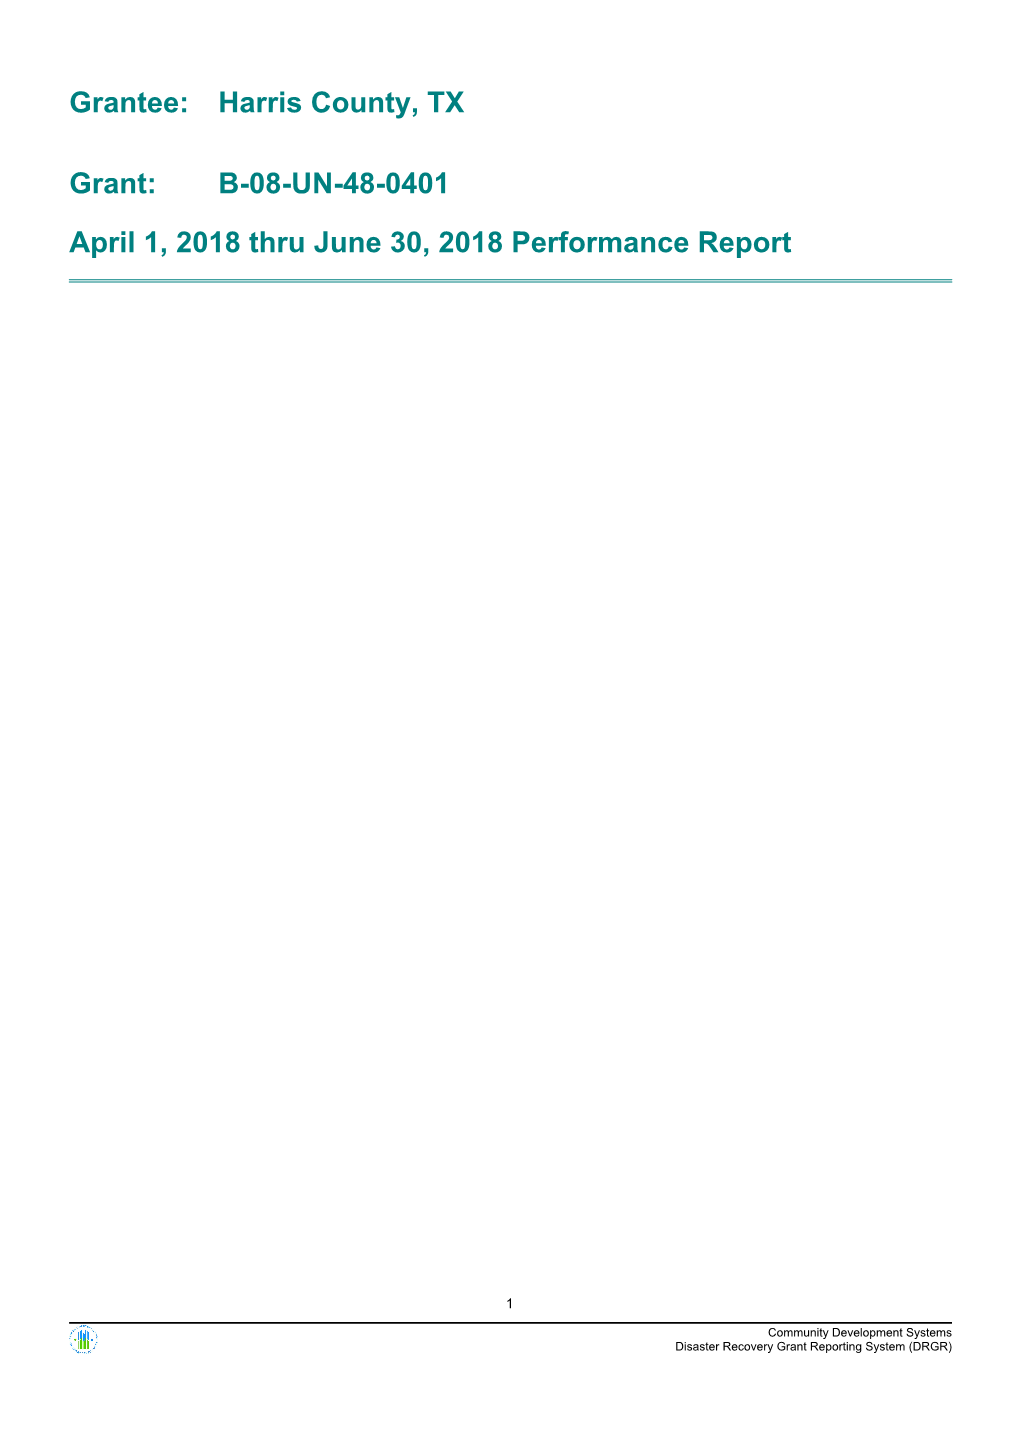 April 1, 2018 Thru June 30, 2018 Performance Report B-08-UN-48